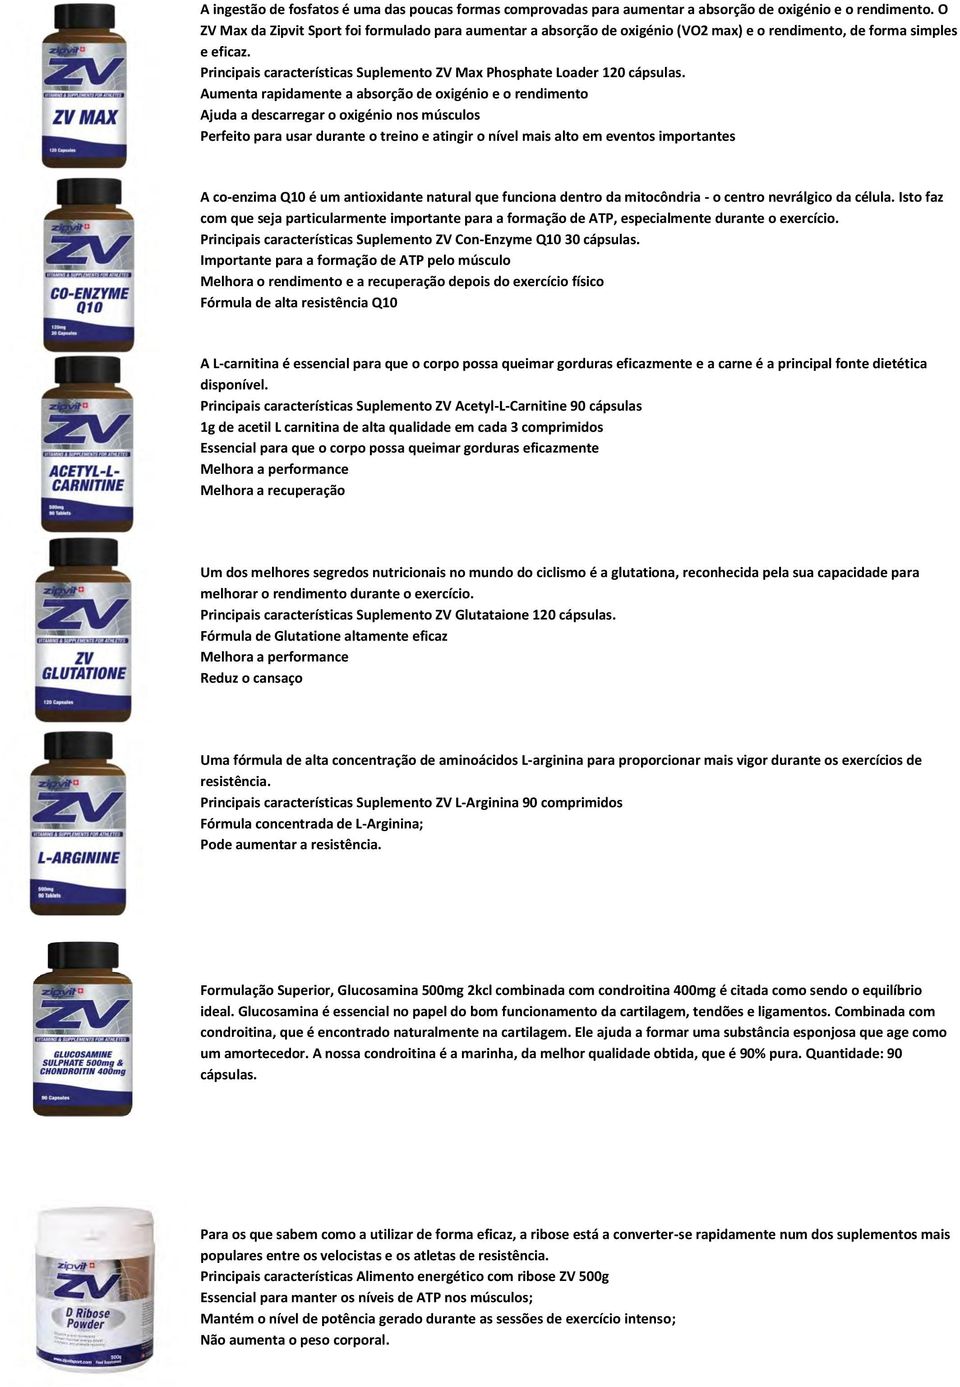 Principais características Suplemento ZV Max Phosphate Loader 120 cápsulas.